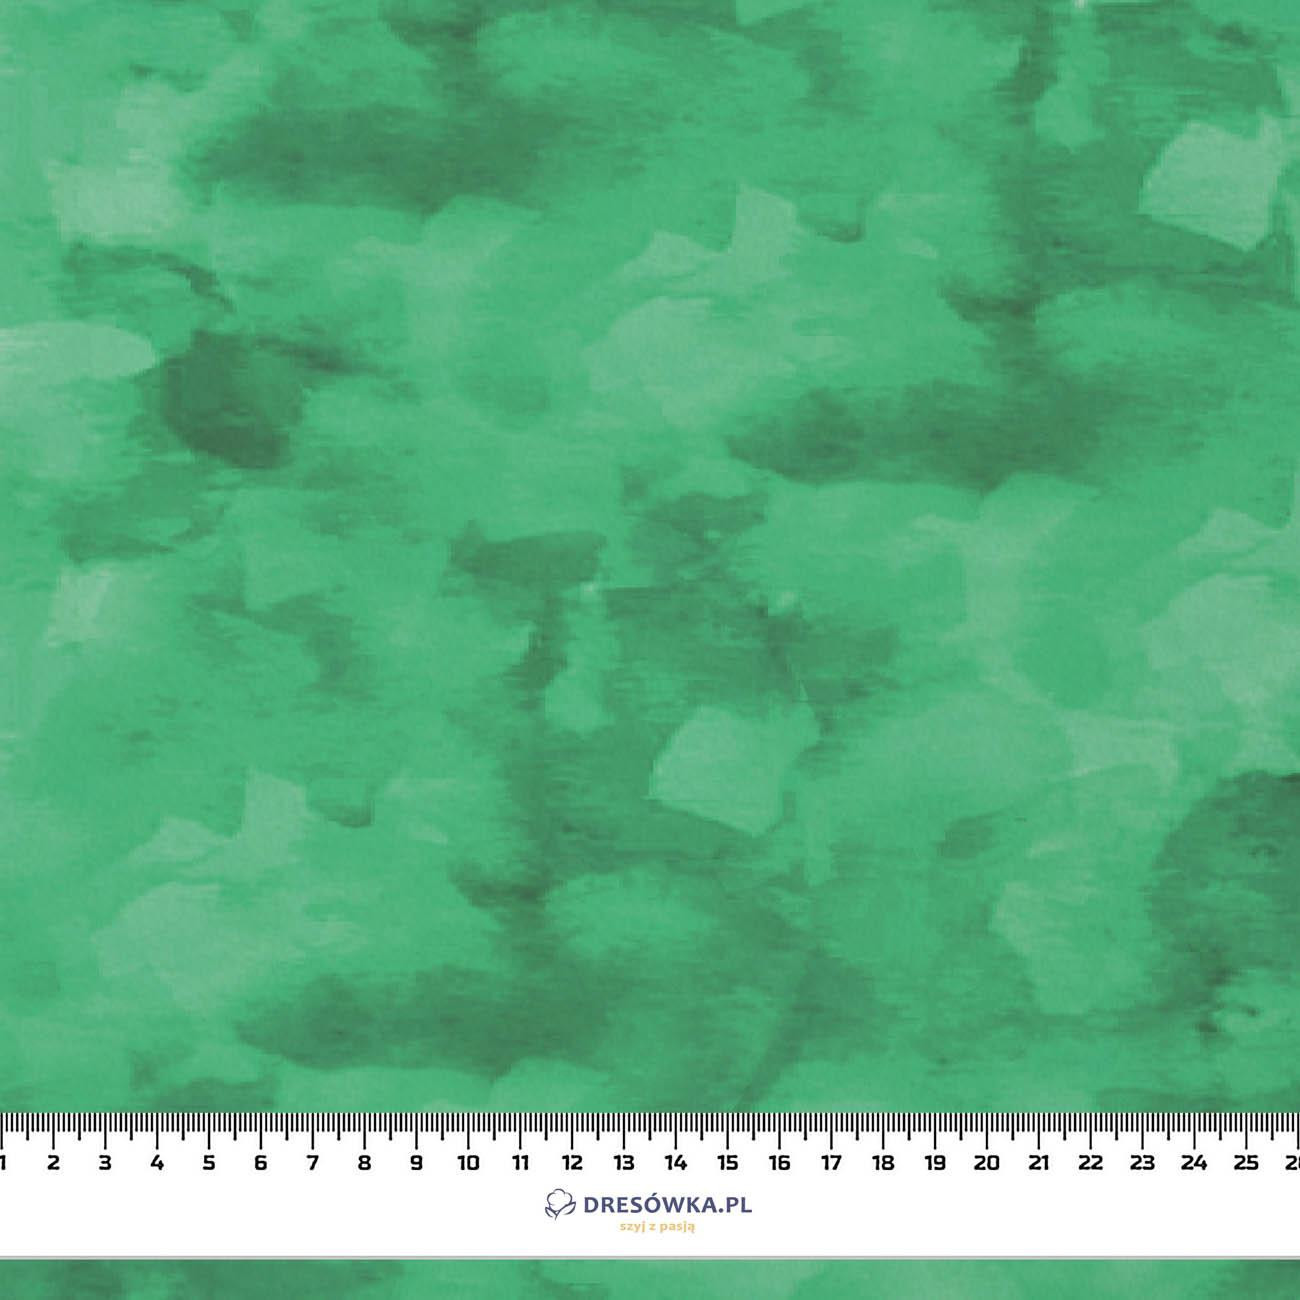 CAMOUFLAGE pat. 2 / green - Waterproof woven fabric